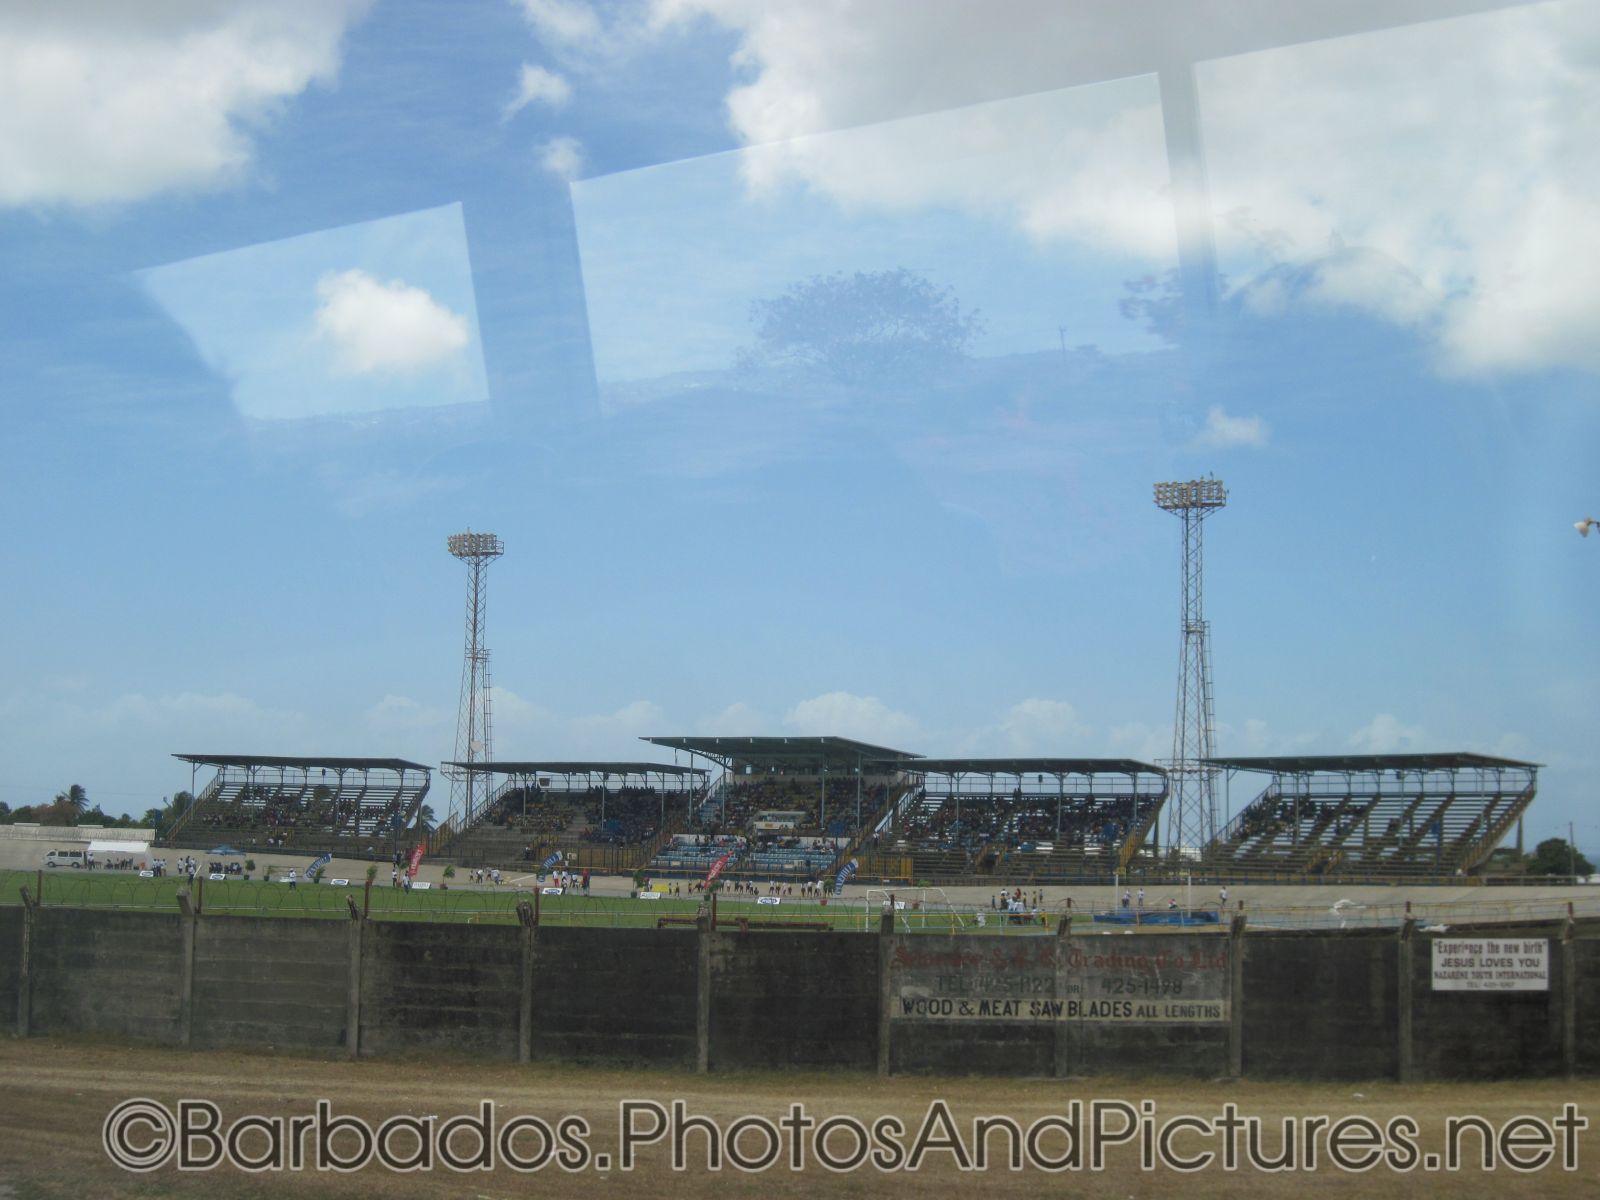 Cricket Stadium in Barbados.jpg
